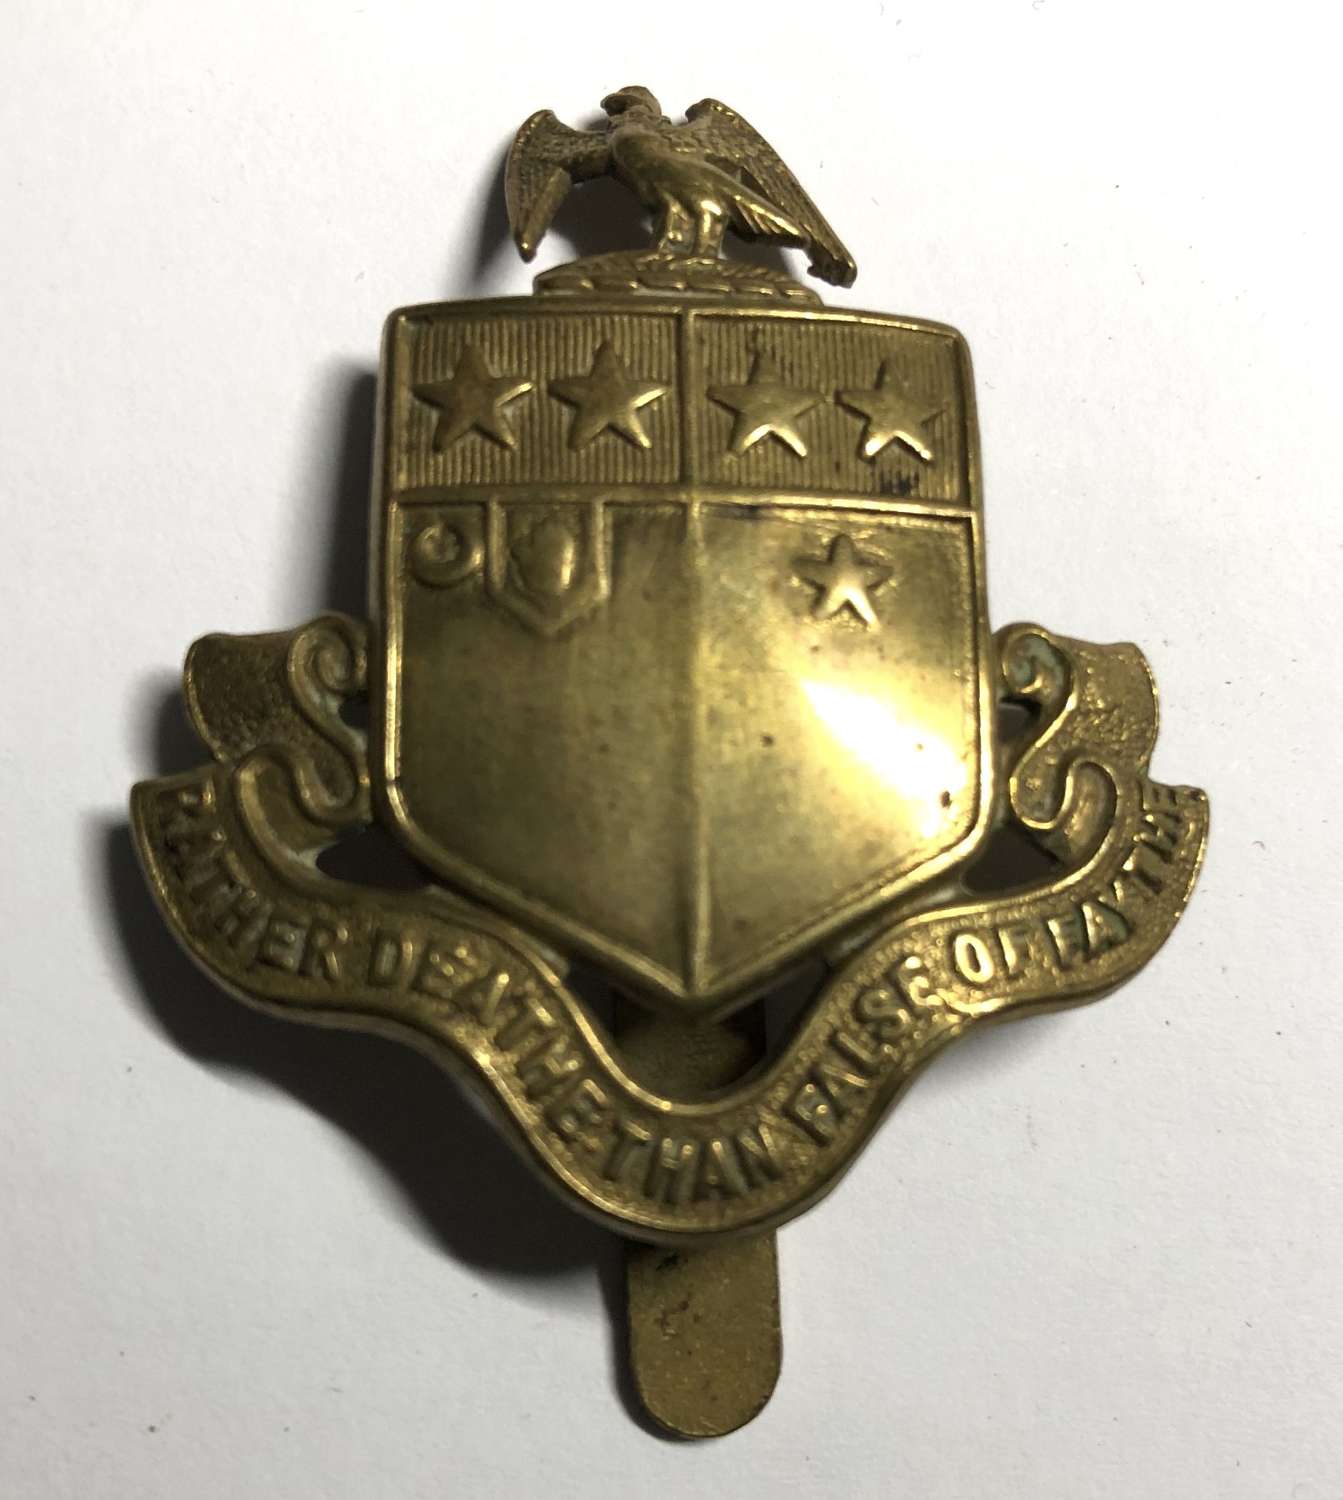 St. John's School OTC Leatherhead, Surrey 3rd pattern cap badge